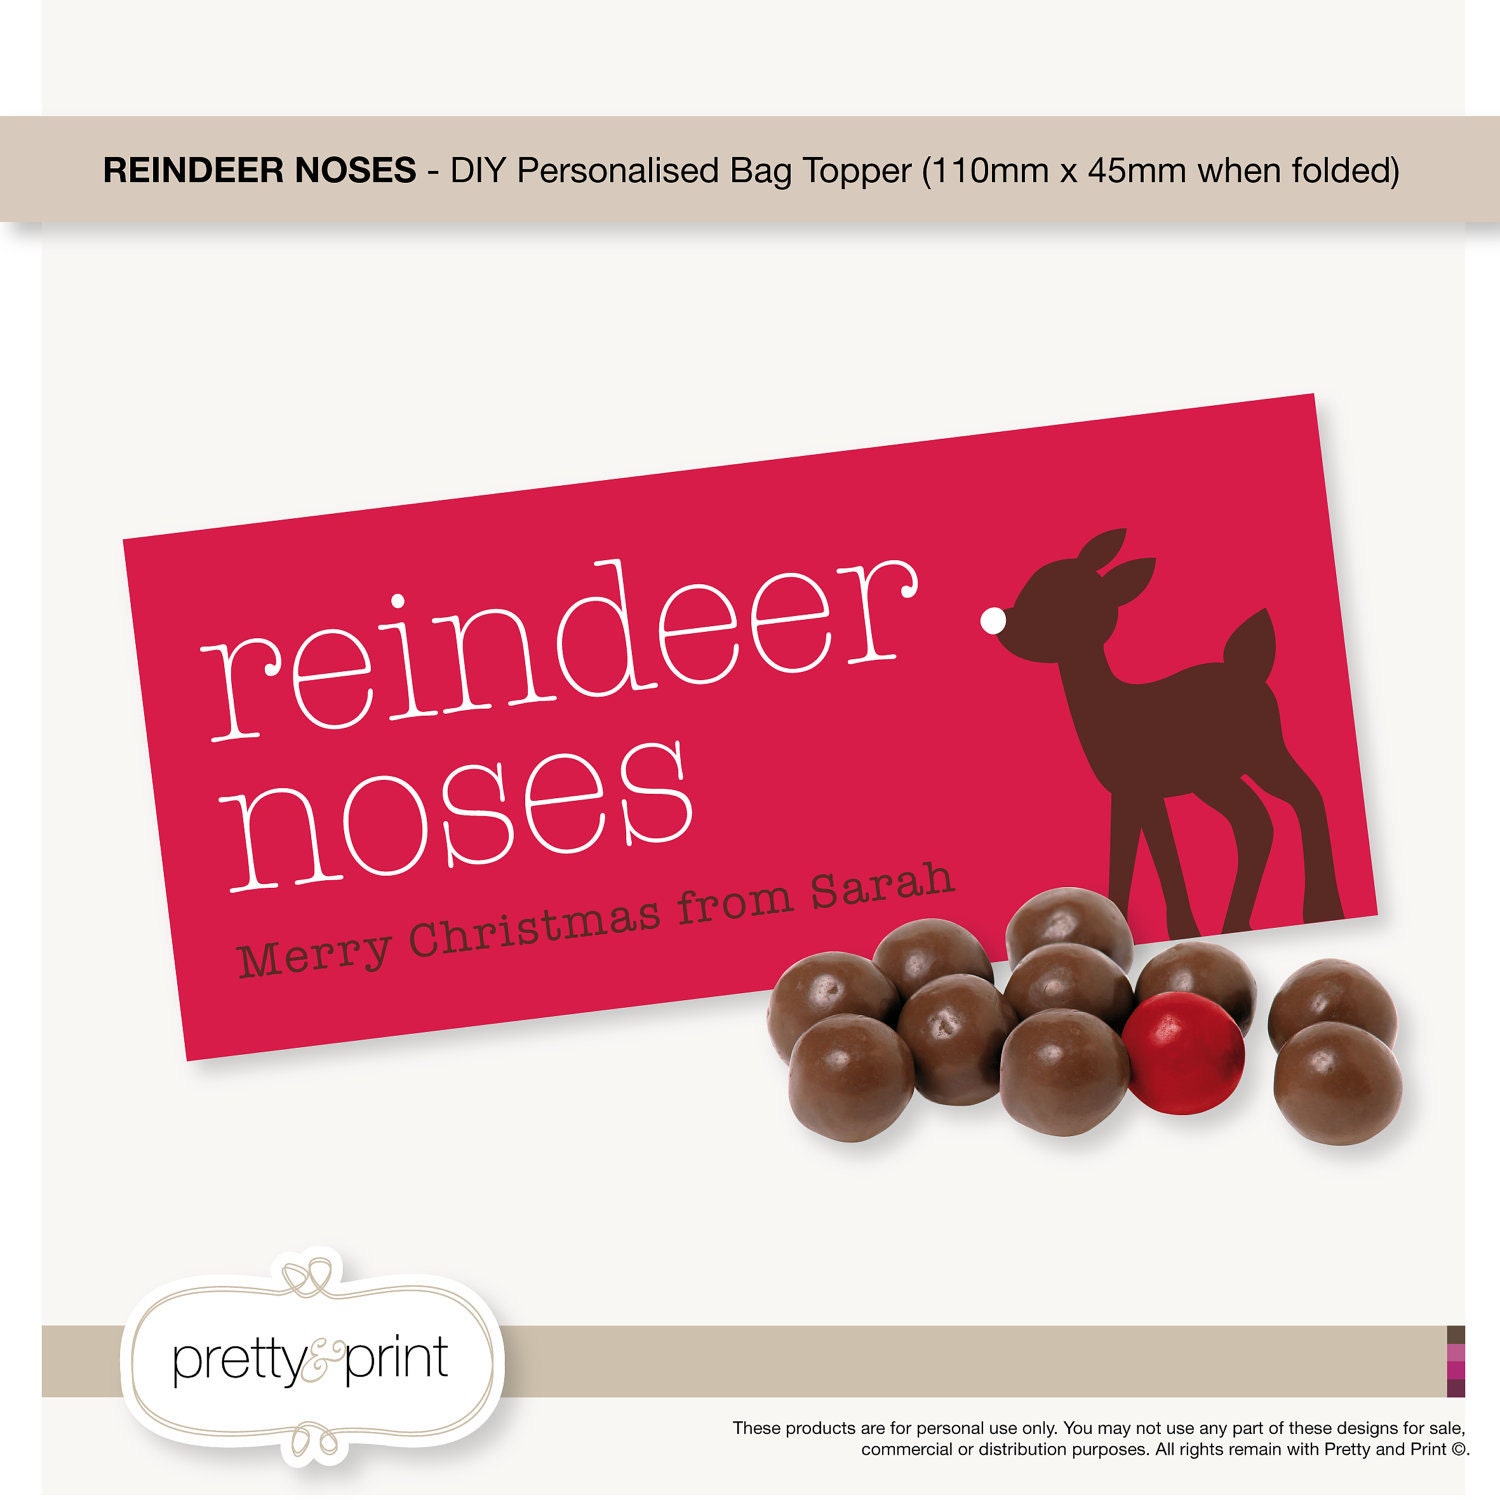 reindeer-noses-bag-topper-diy-personalised-by-prettyandprint-retail